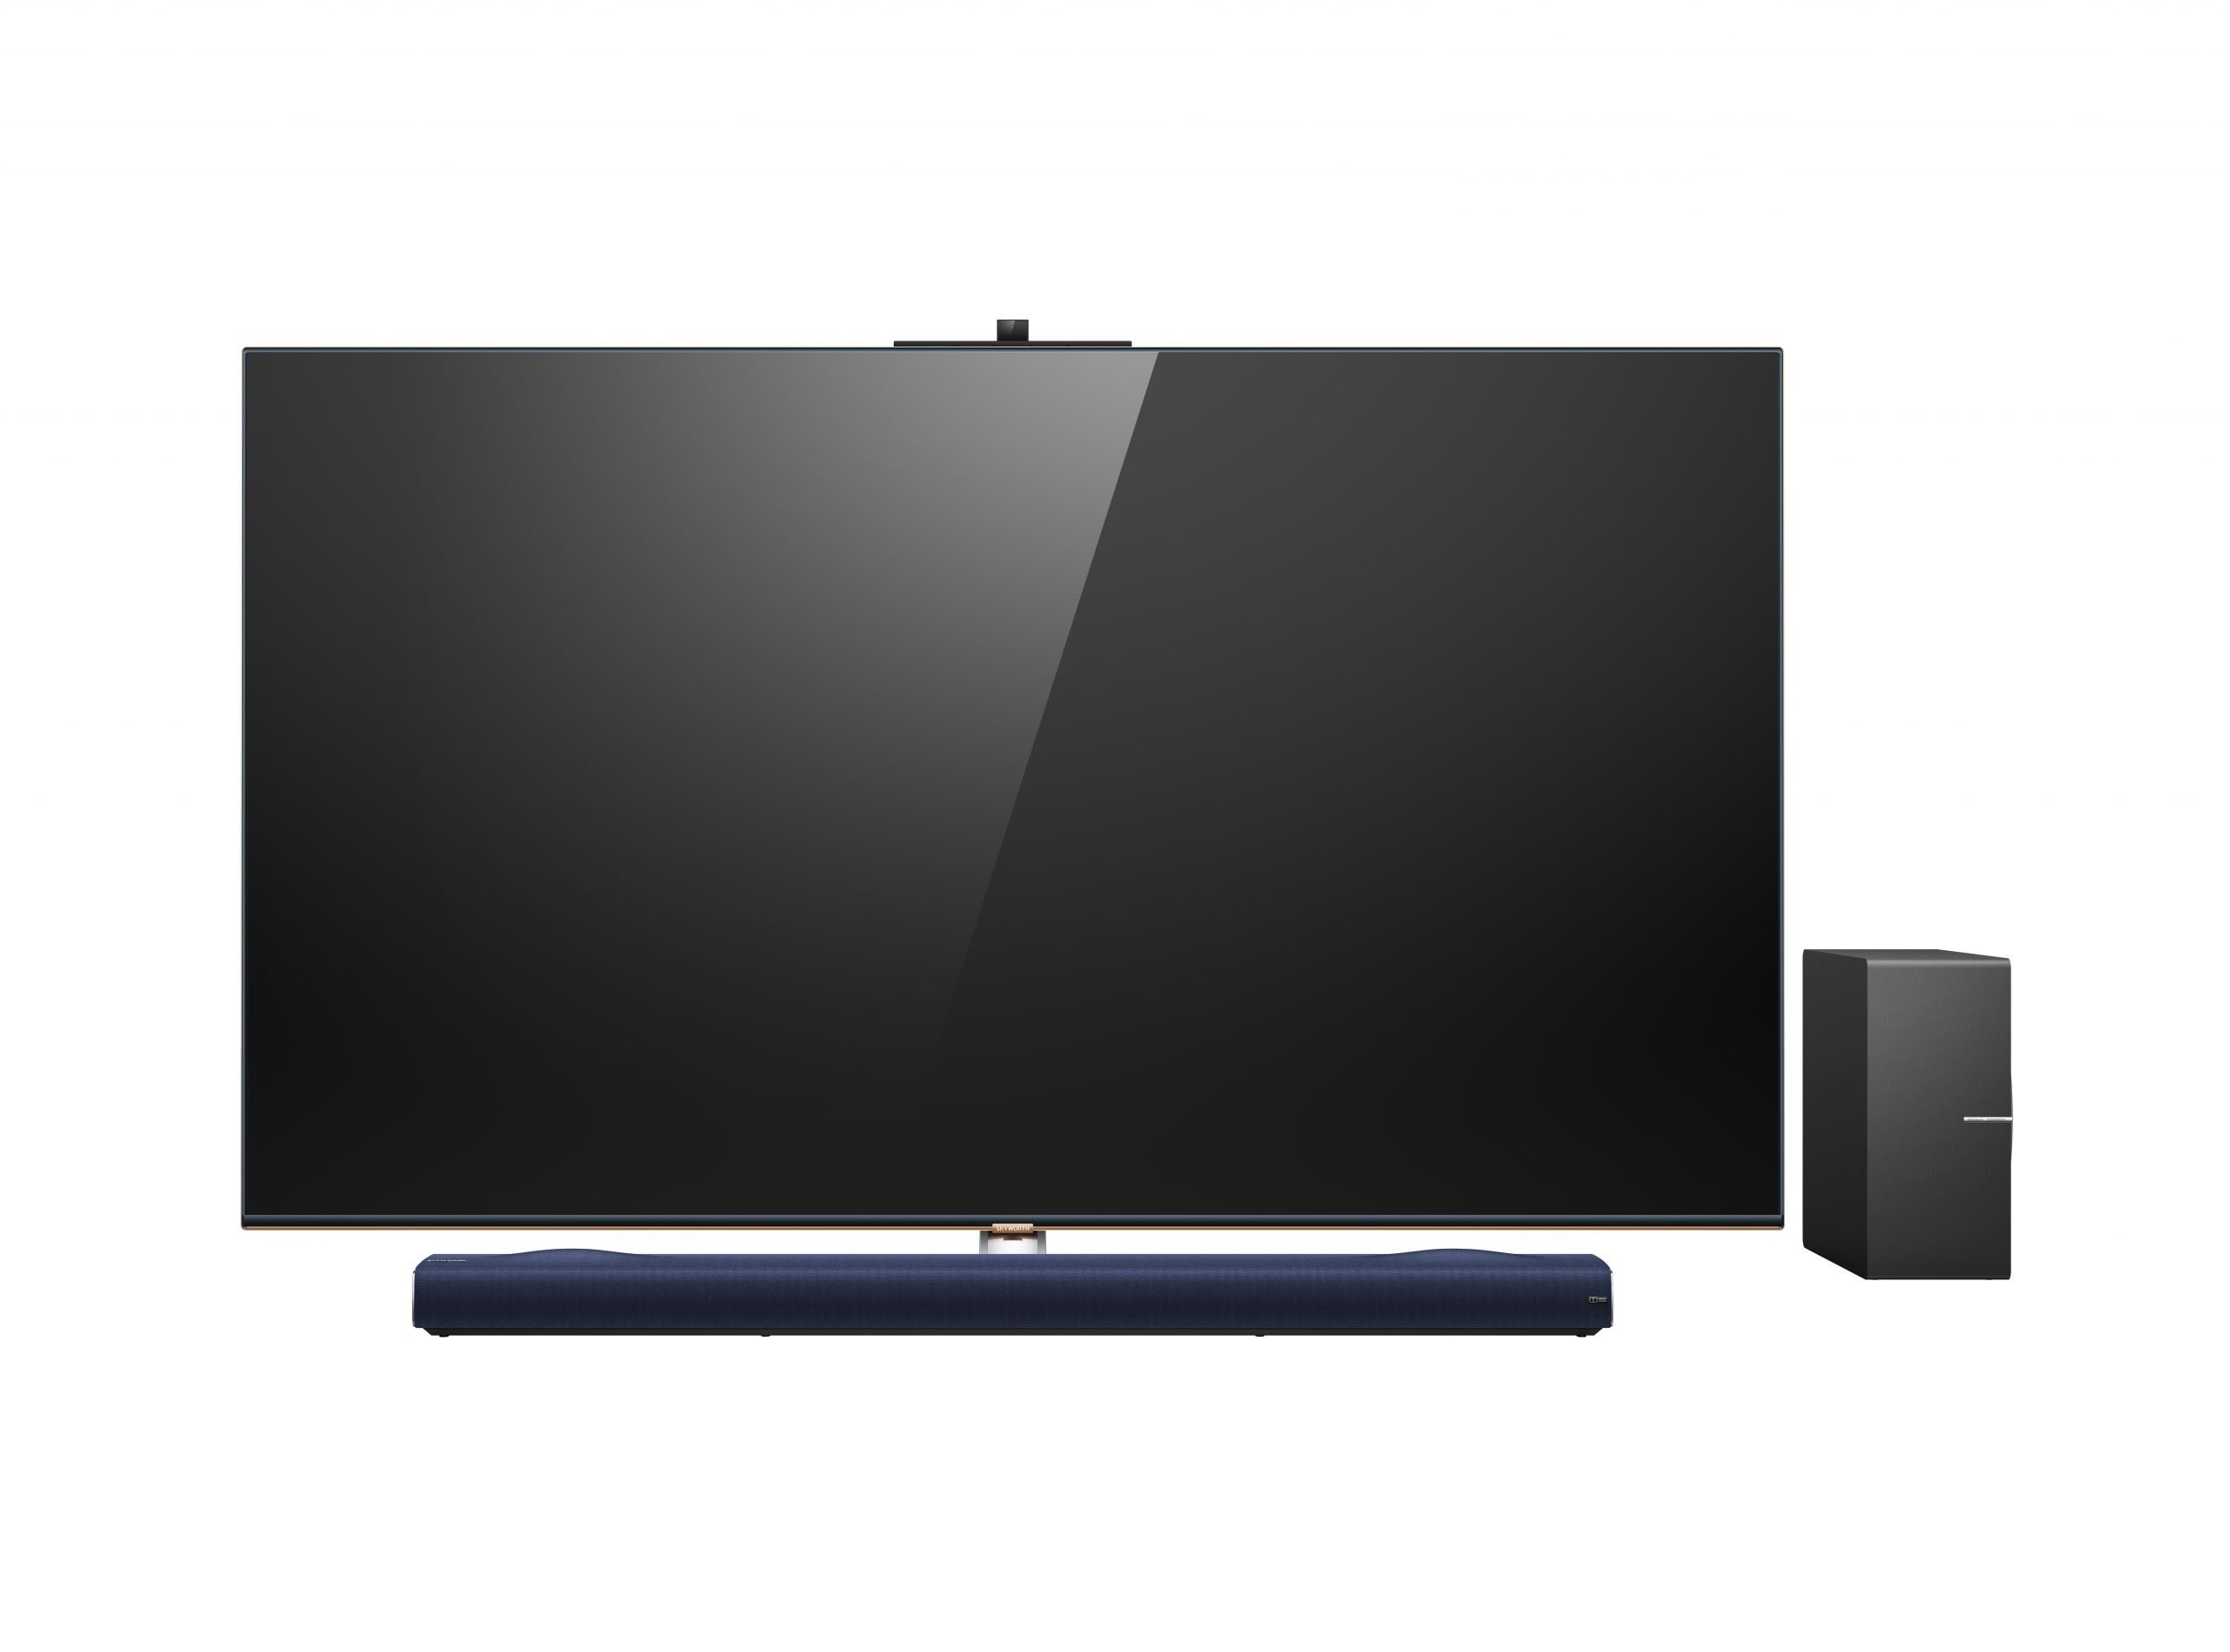 Skyworth unveils new W81 wallpaper TV and Q91 8K TV, announces plans to  enter US - Gizmochina